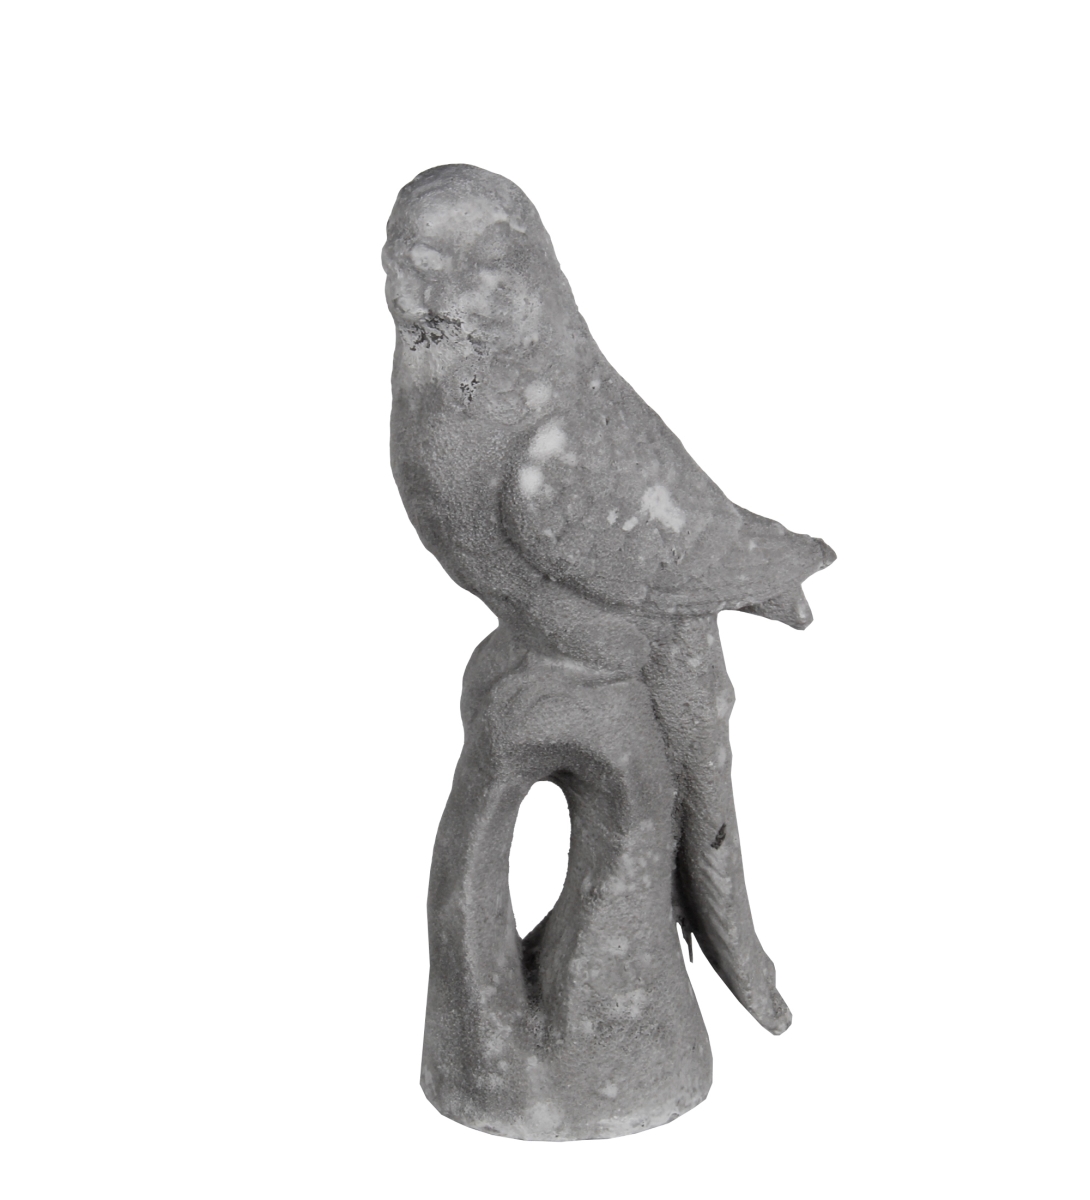 7.5 X 5 X 16 In. Ceramic Parrot Statue In Stone